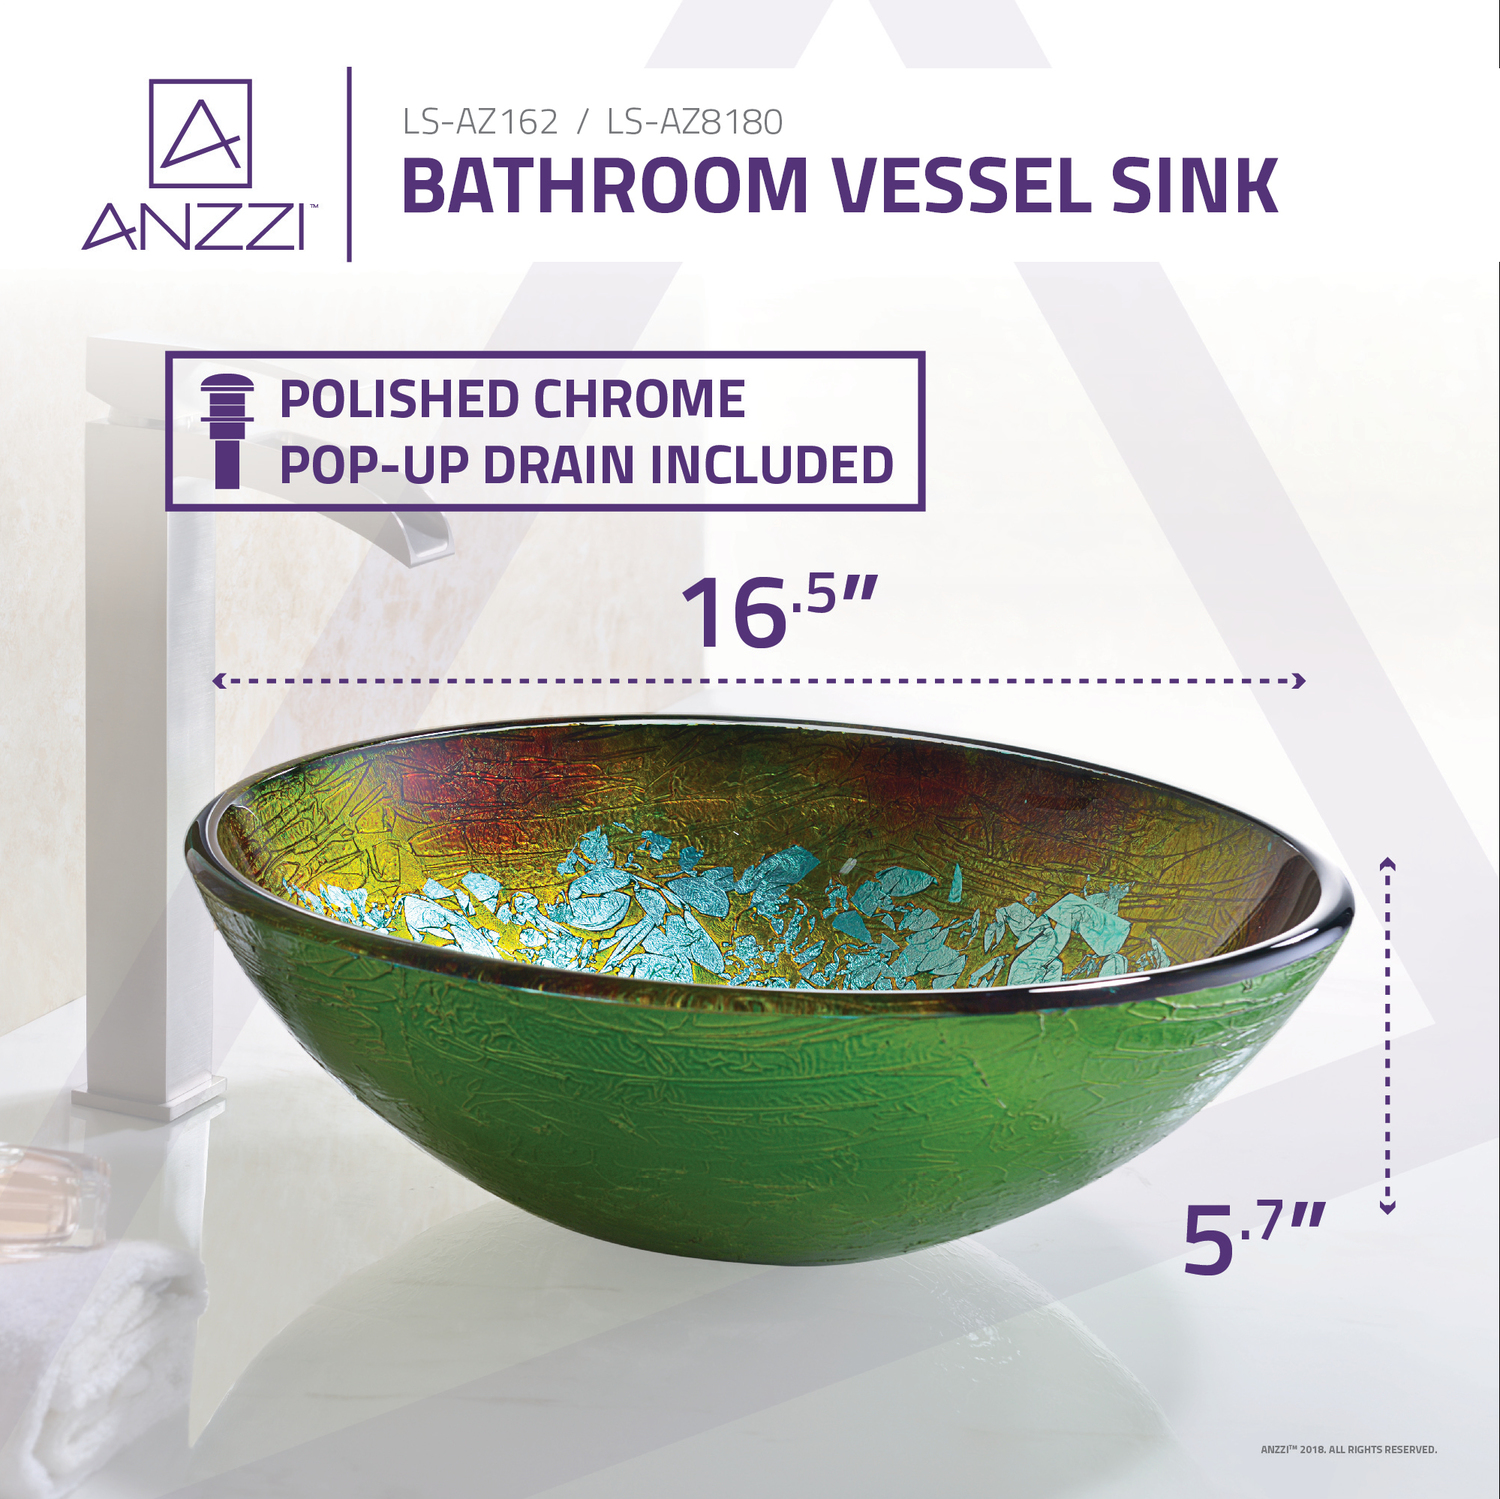 blue vanity unit bathroom Anzzi BATHROOM - Sinks - Vessel - Tempered Glass Multi-Colored